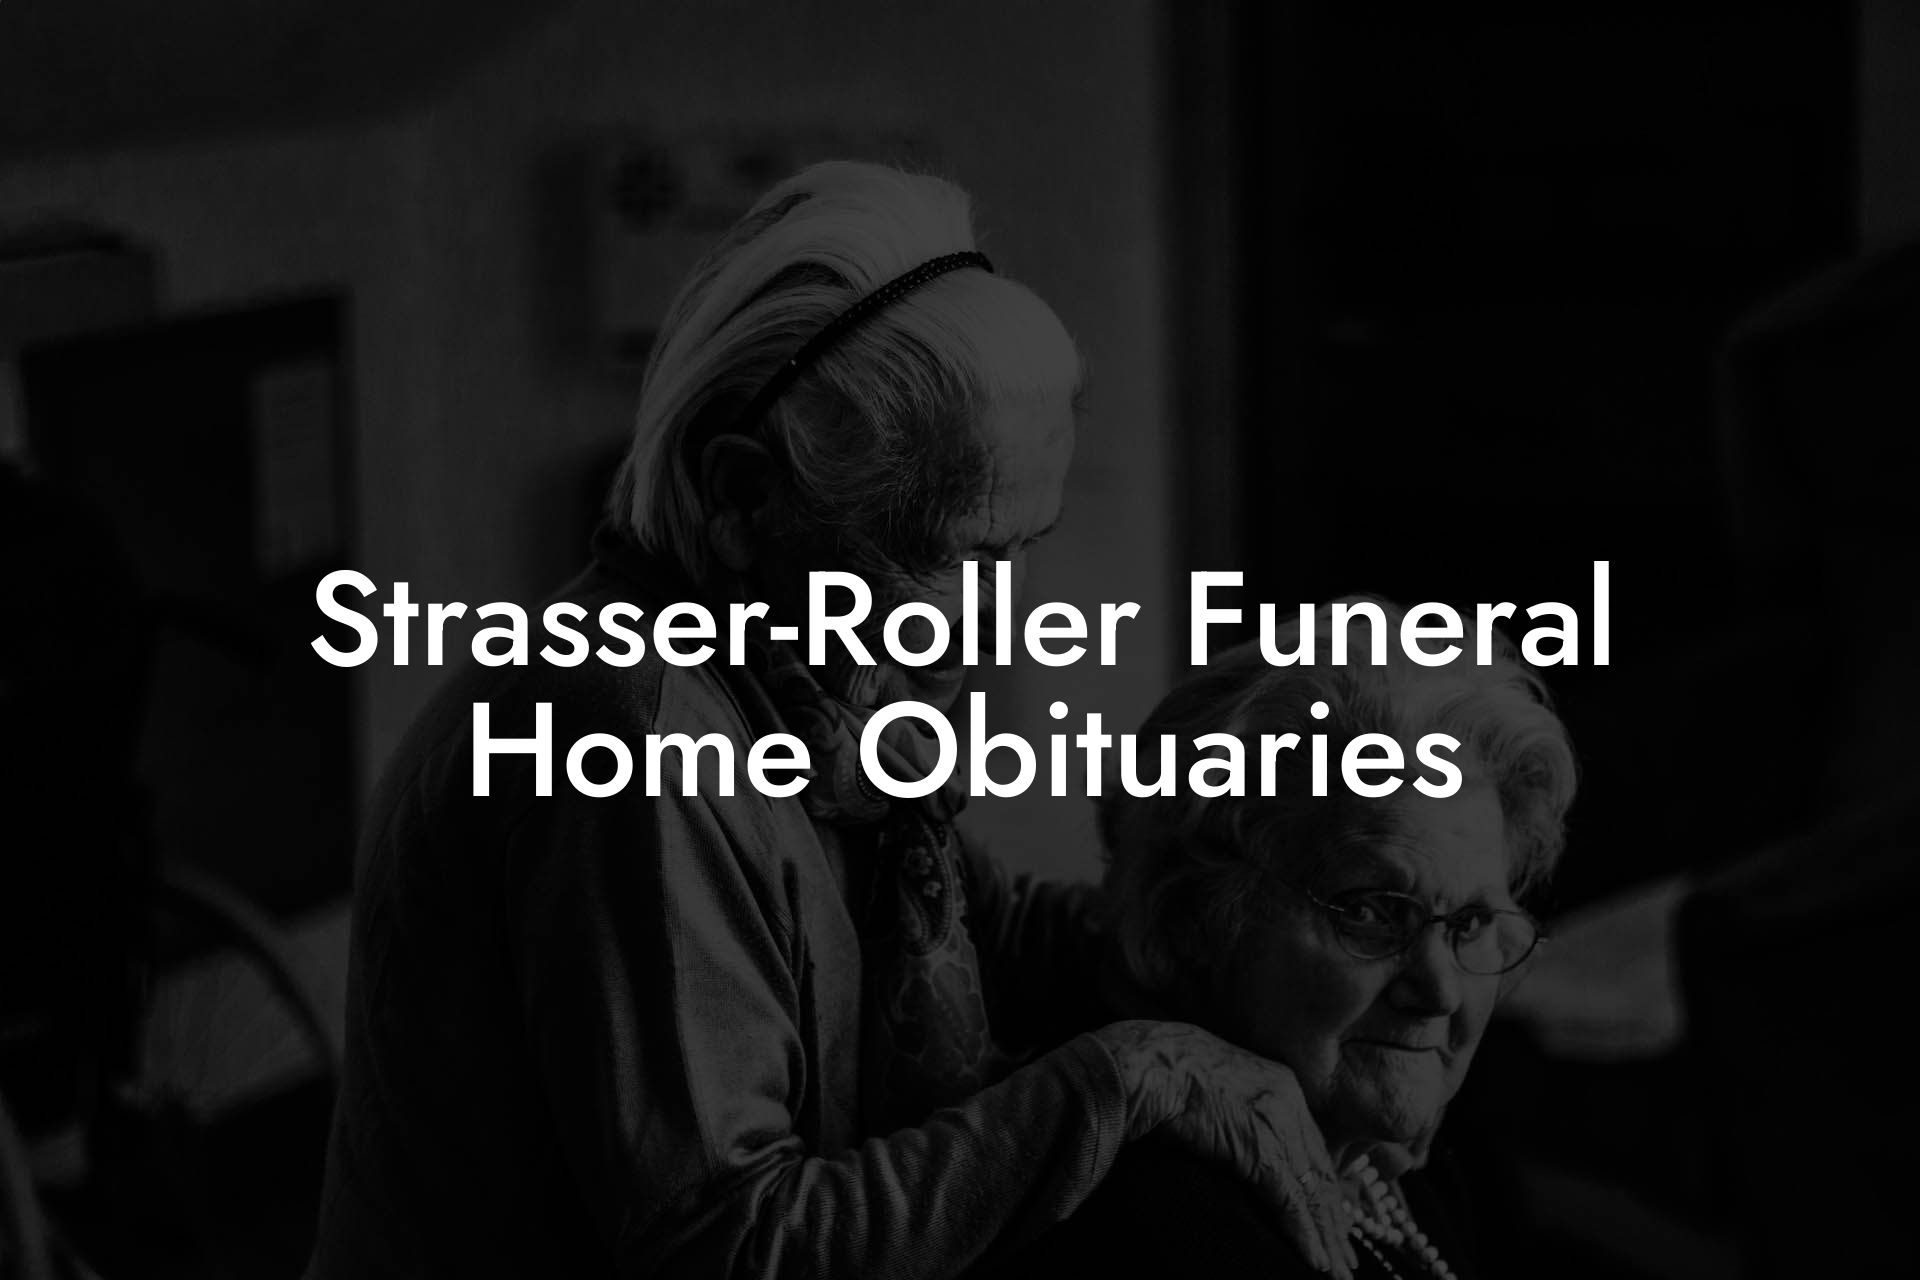 Strasser-Roller Funeral Home Obituaries